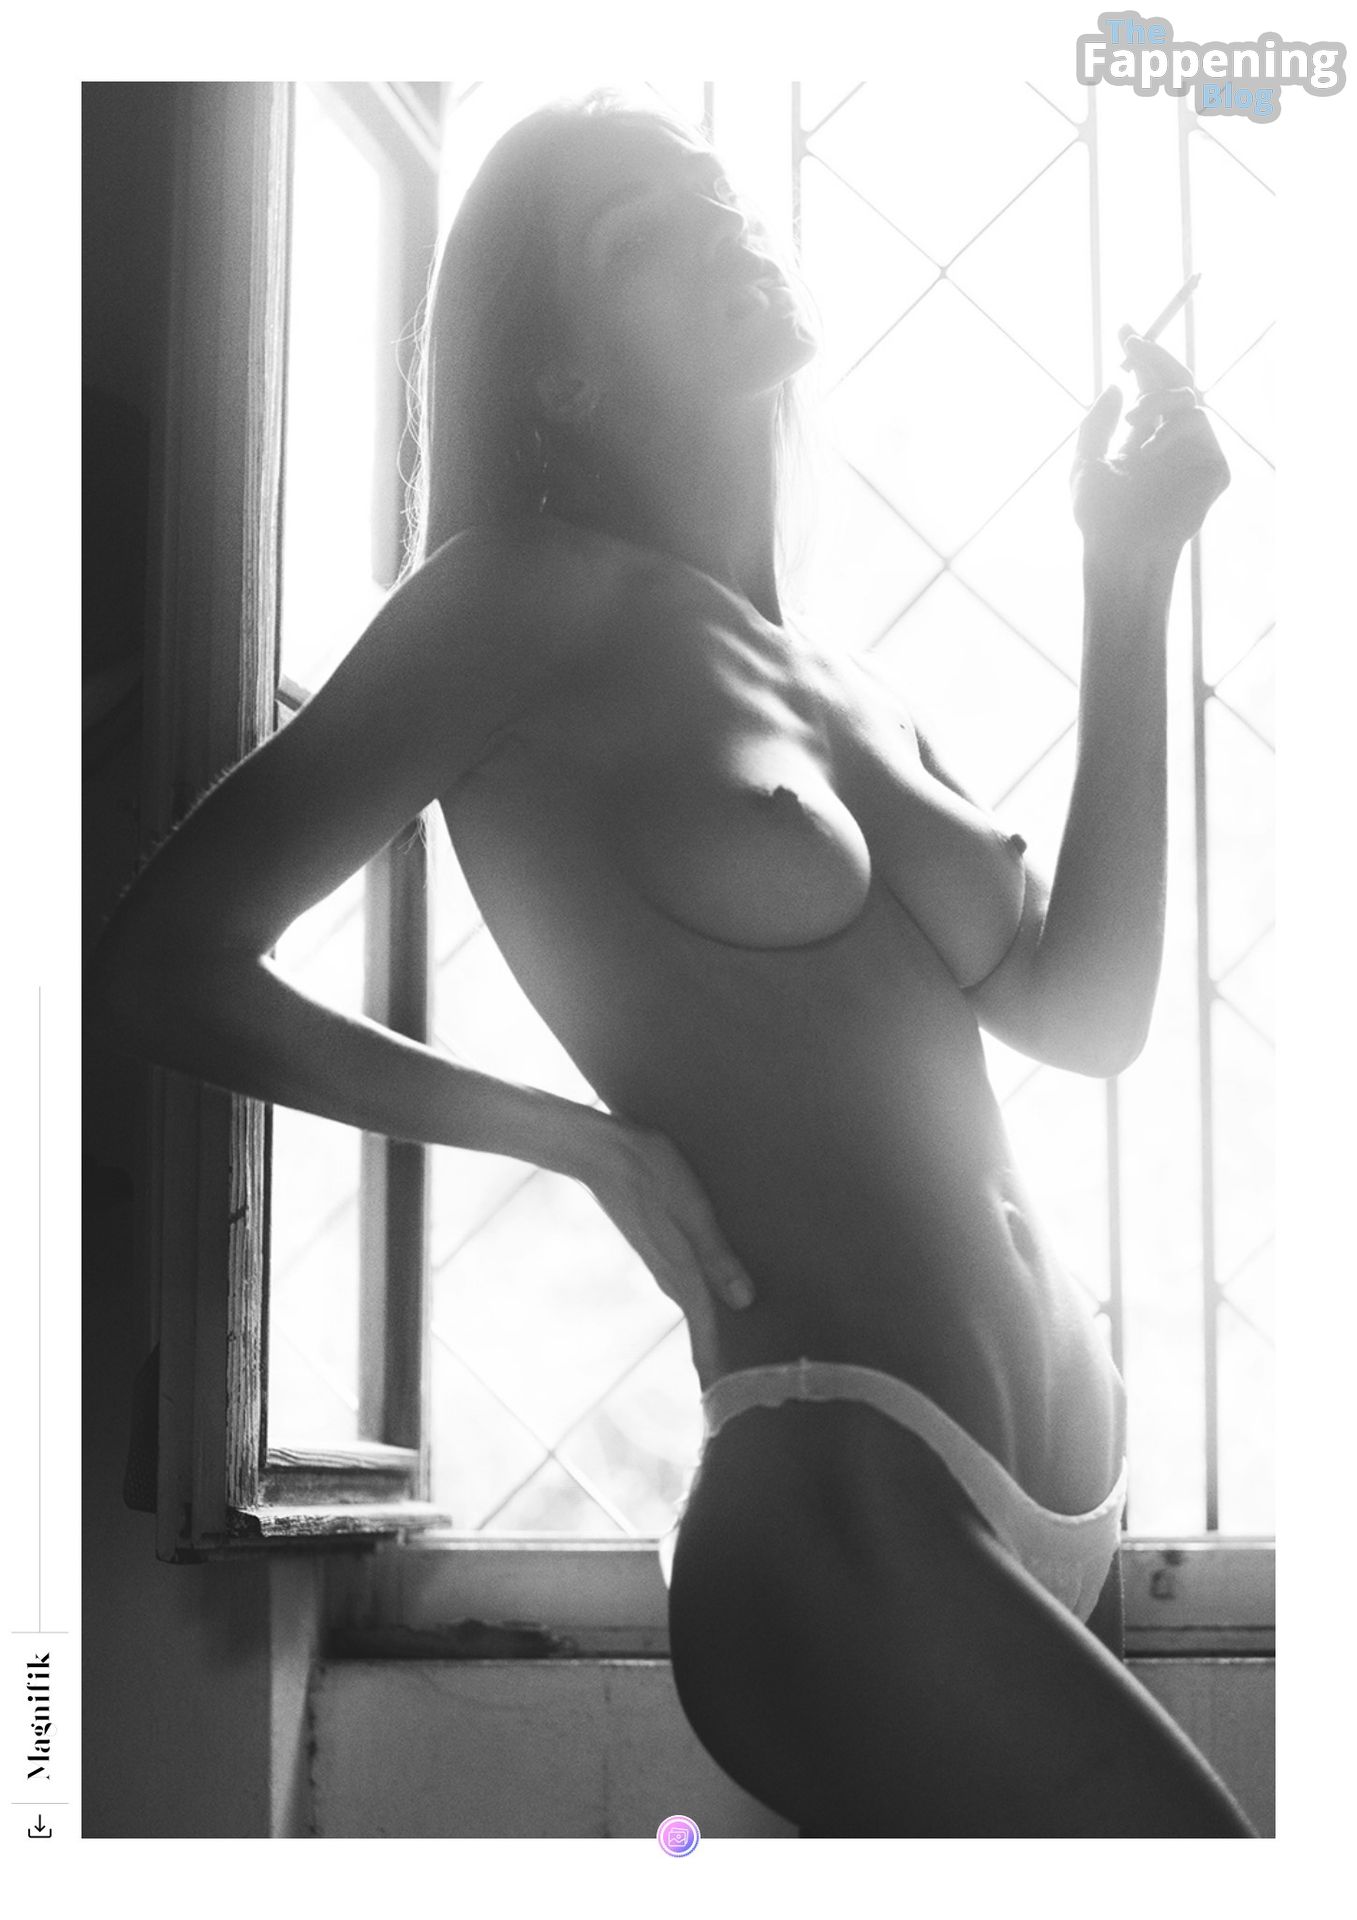 Samantha-Gradoville-Nude-14-The-Fappening-Blog.jpg